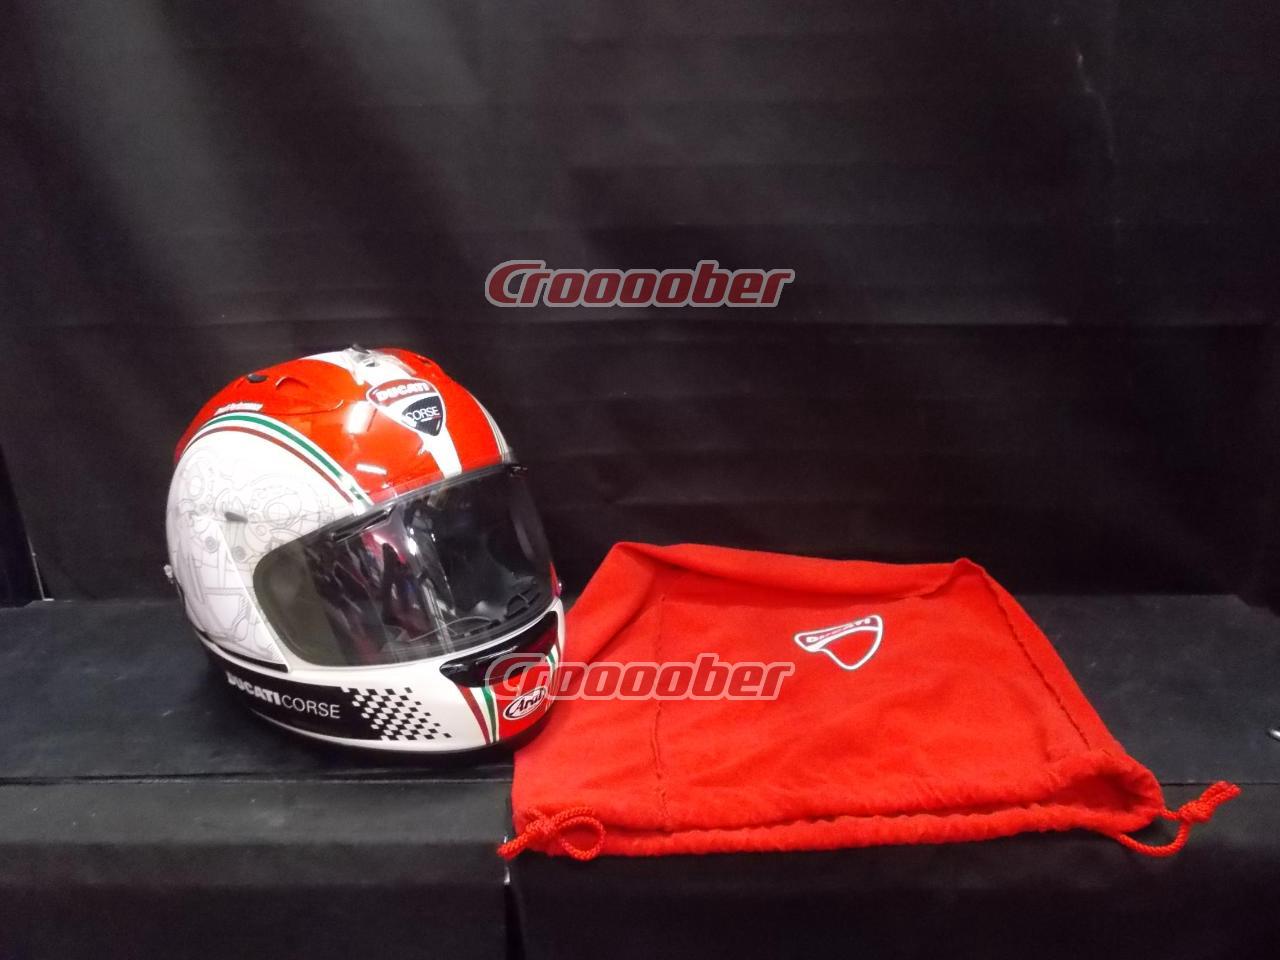 Size: 57-58 Arai / Ducati RX-7 RR5 DUC Corse 10 | Fullface | Croooober